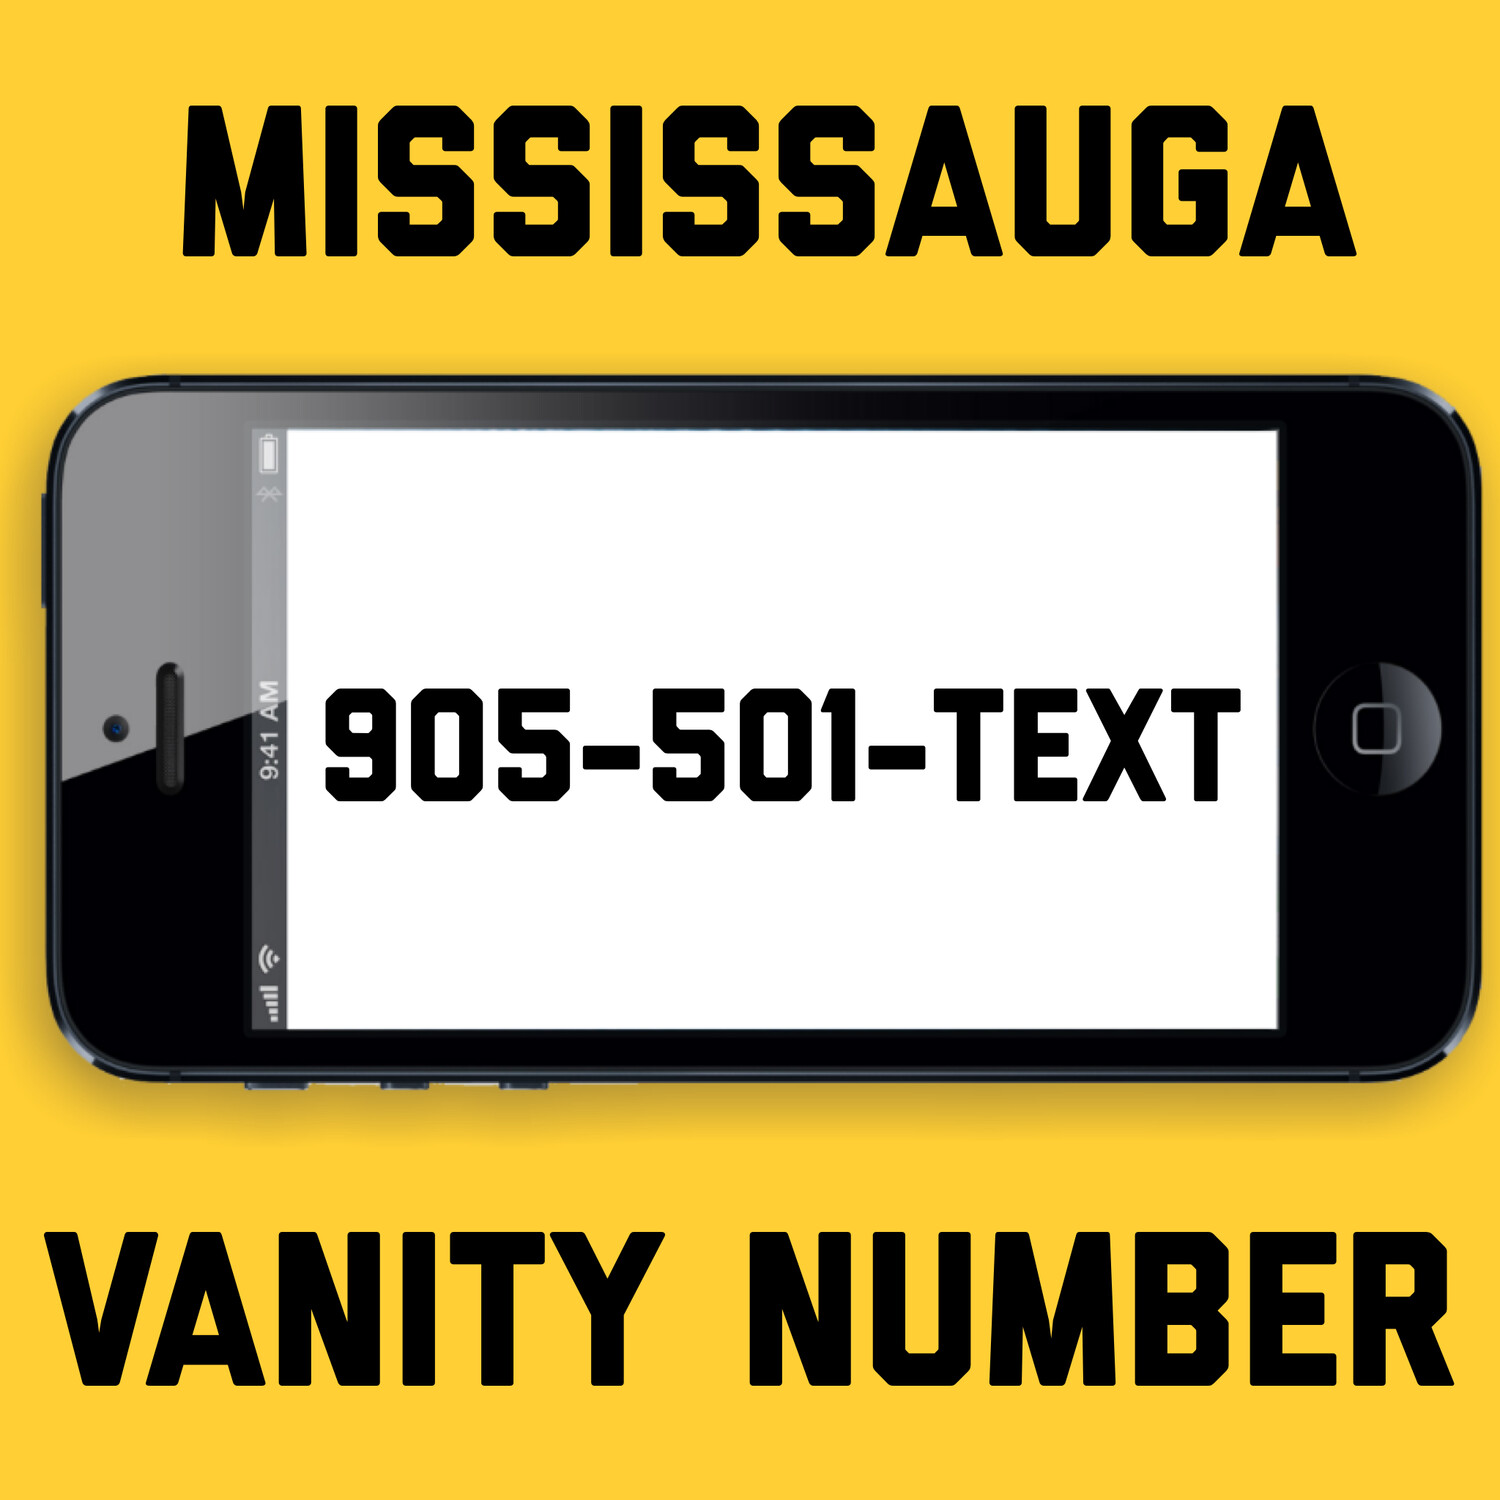 905-501-TEXT Mississauga Vanity Number